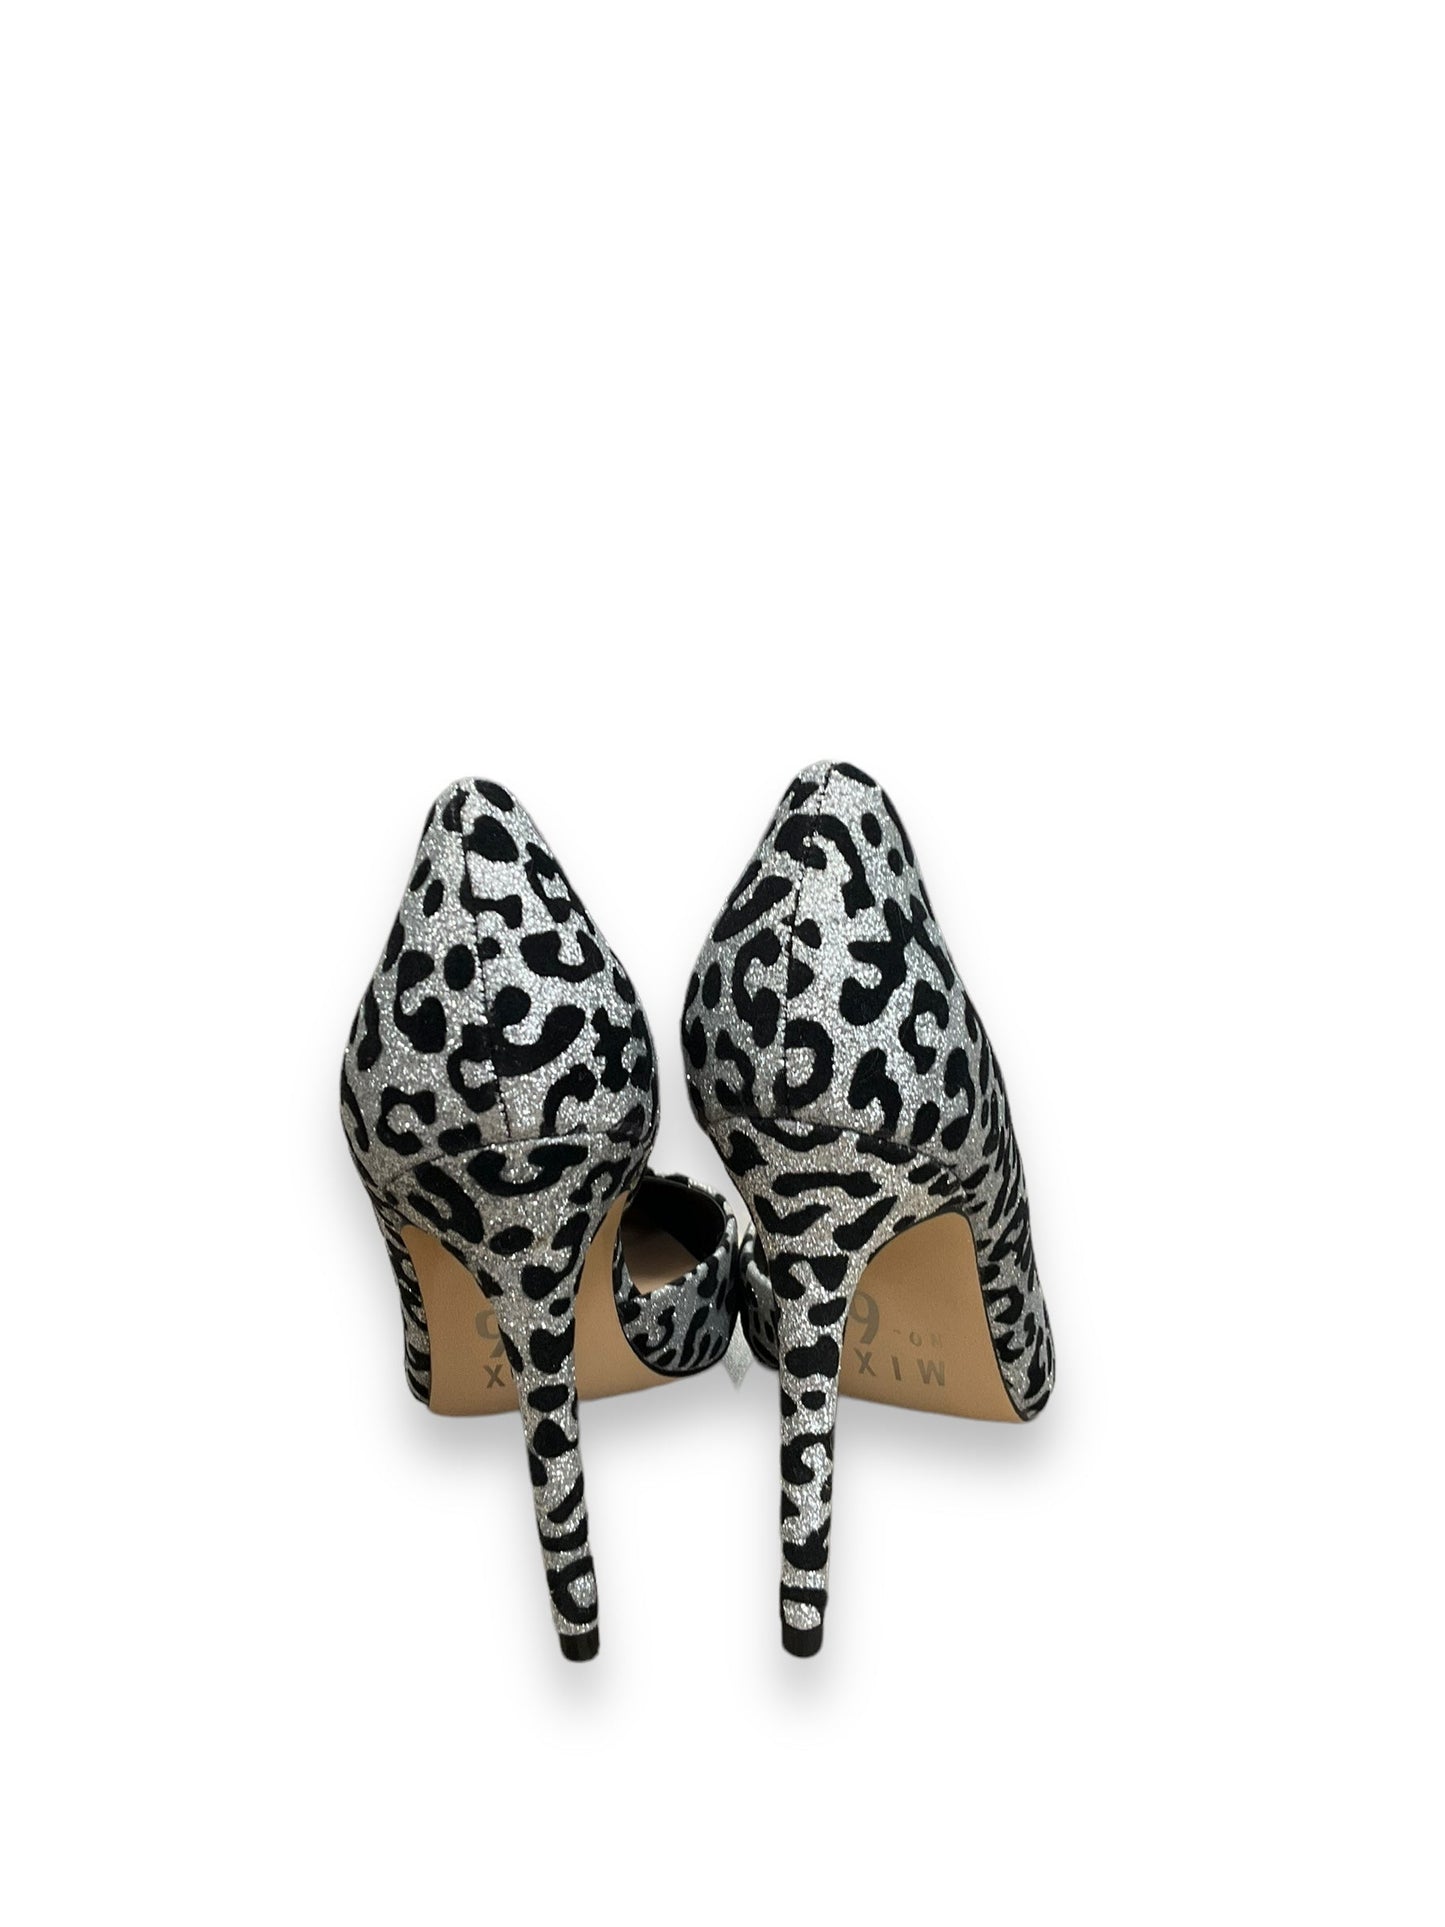 Animal Print Shoes Heels Stiletto Mix No 6, Size 6